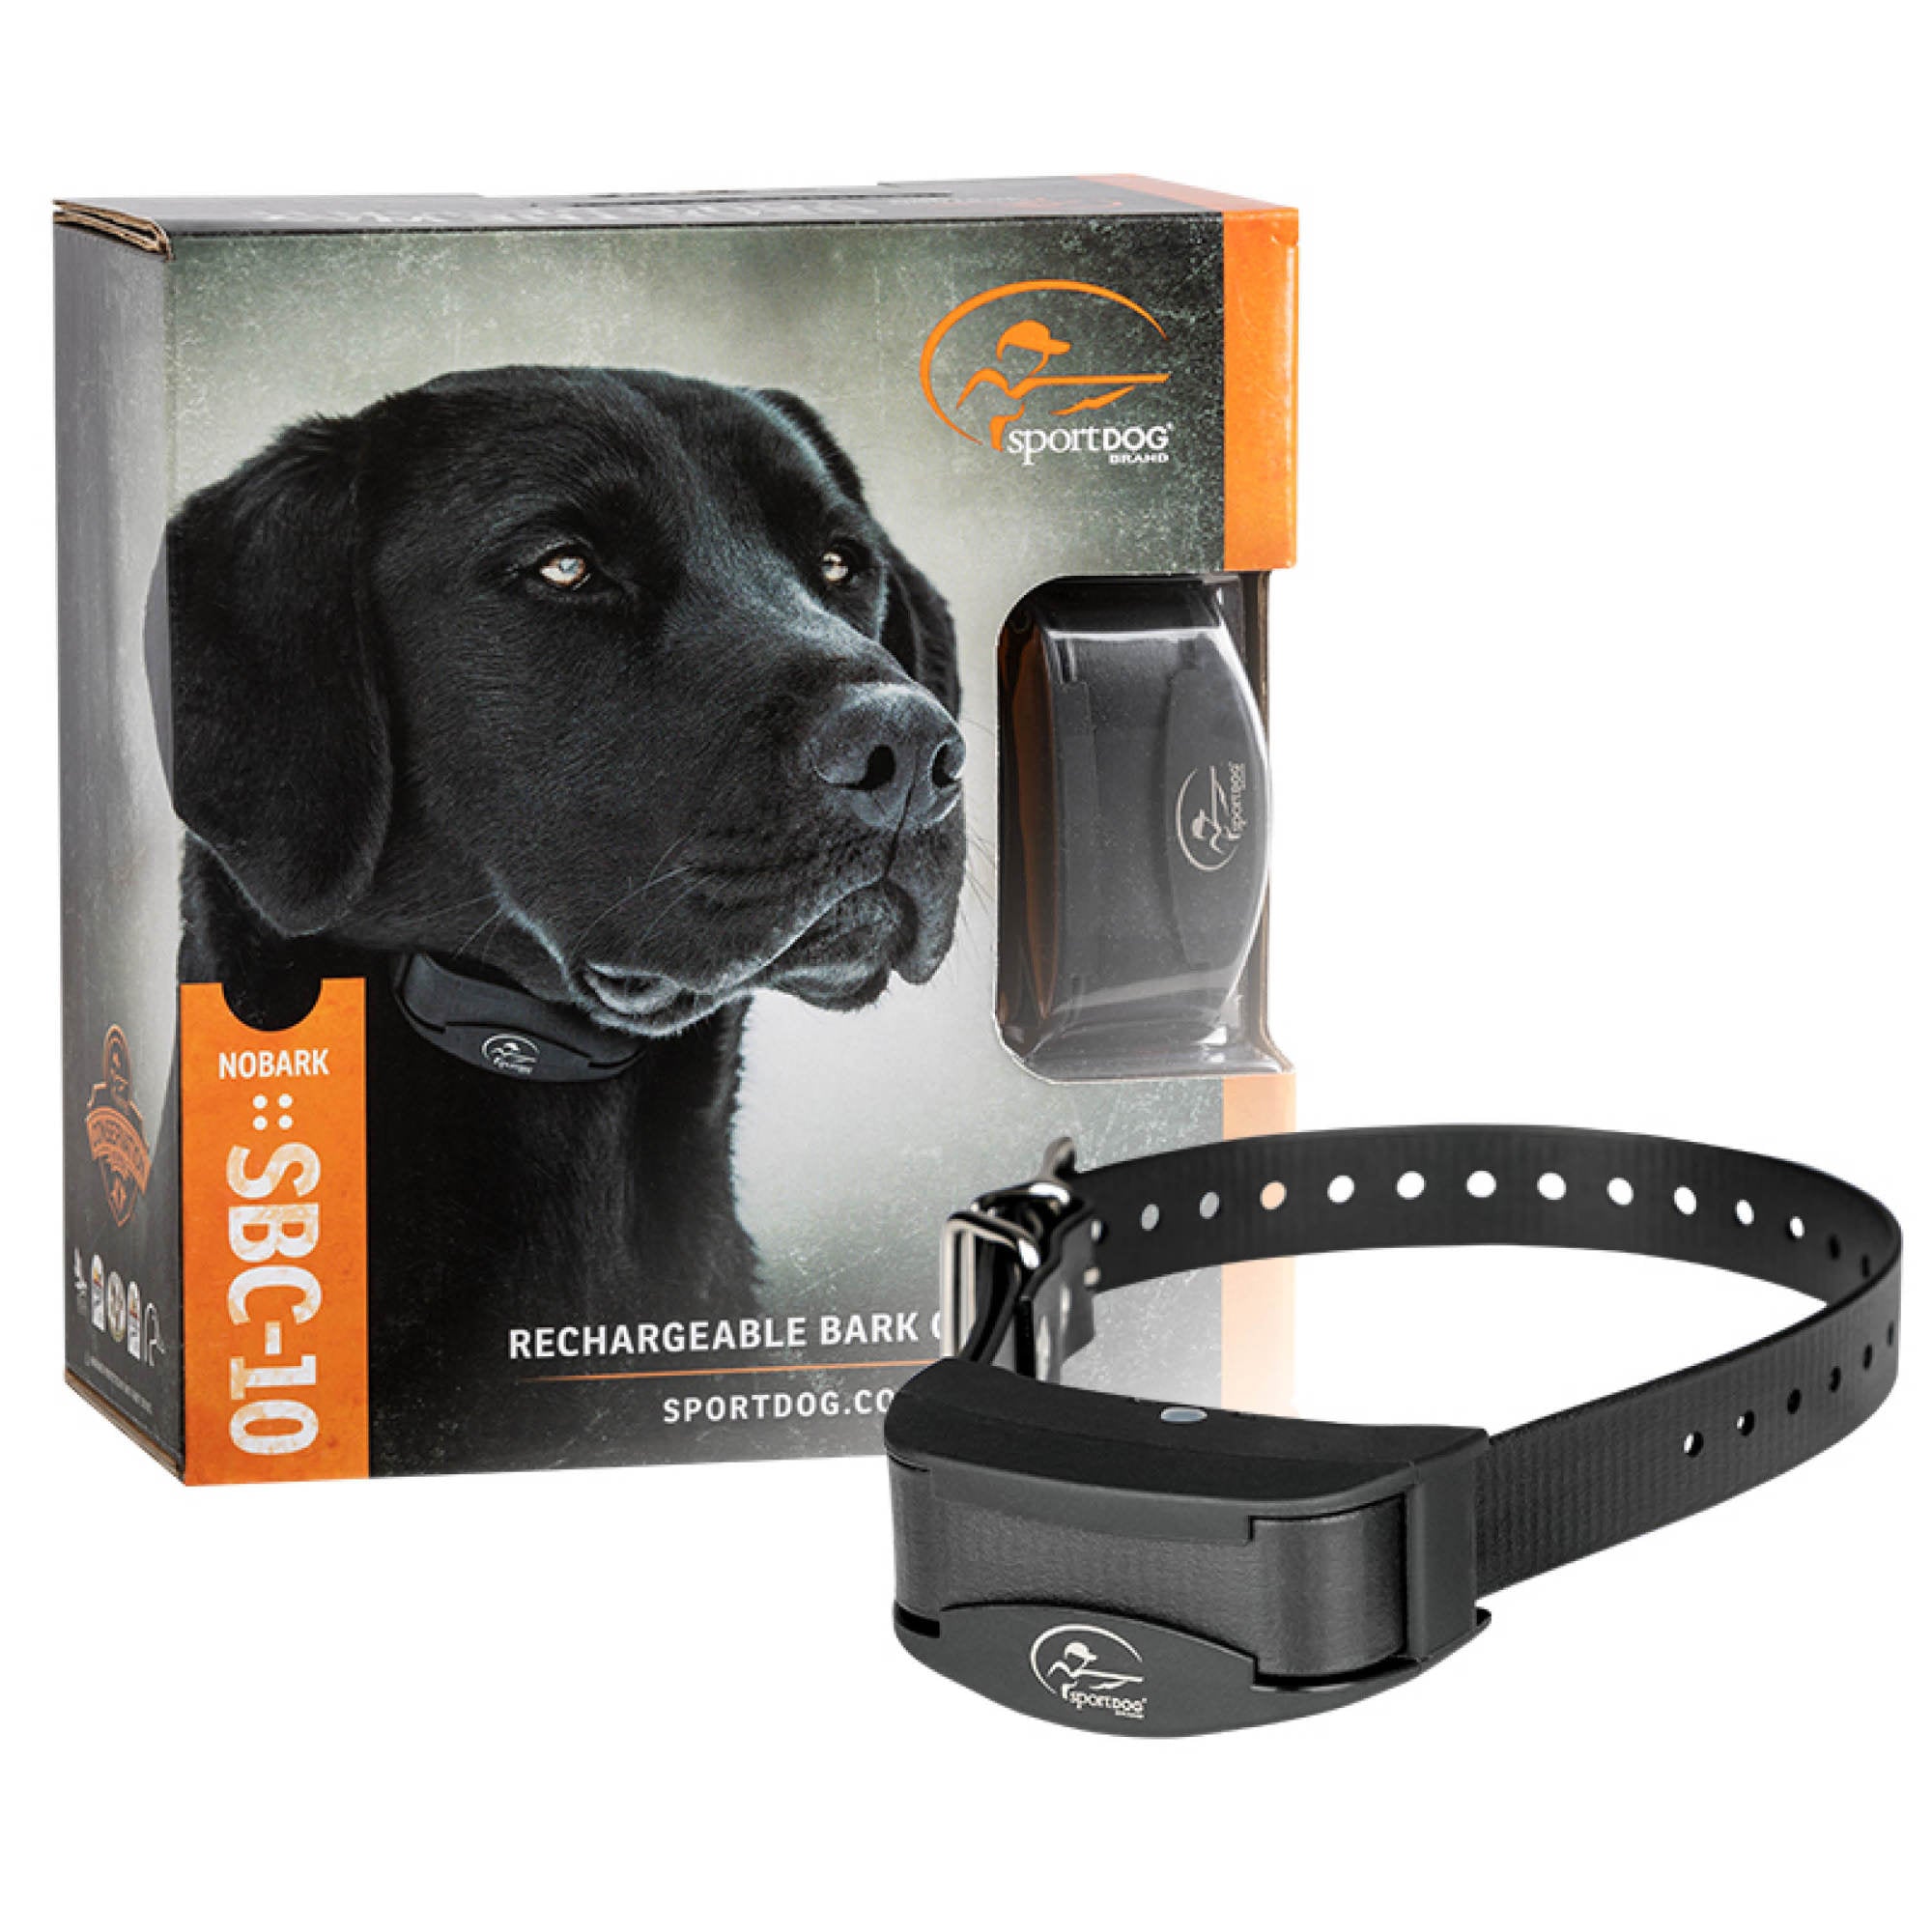 SportDOG Brand NoBark 10 Collar - Rechargeable, Programmable Bark